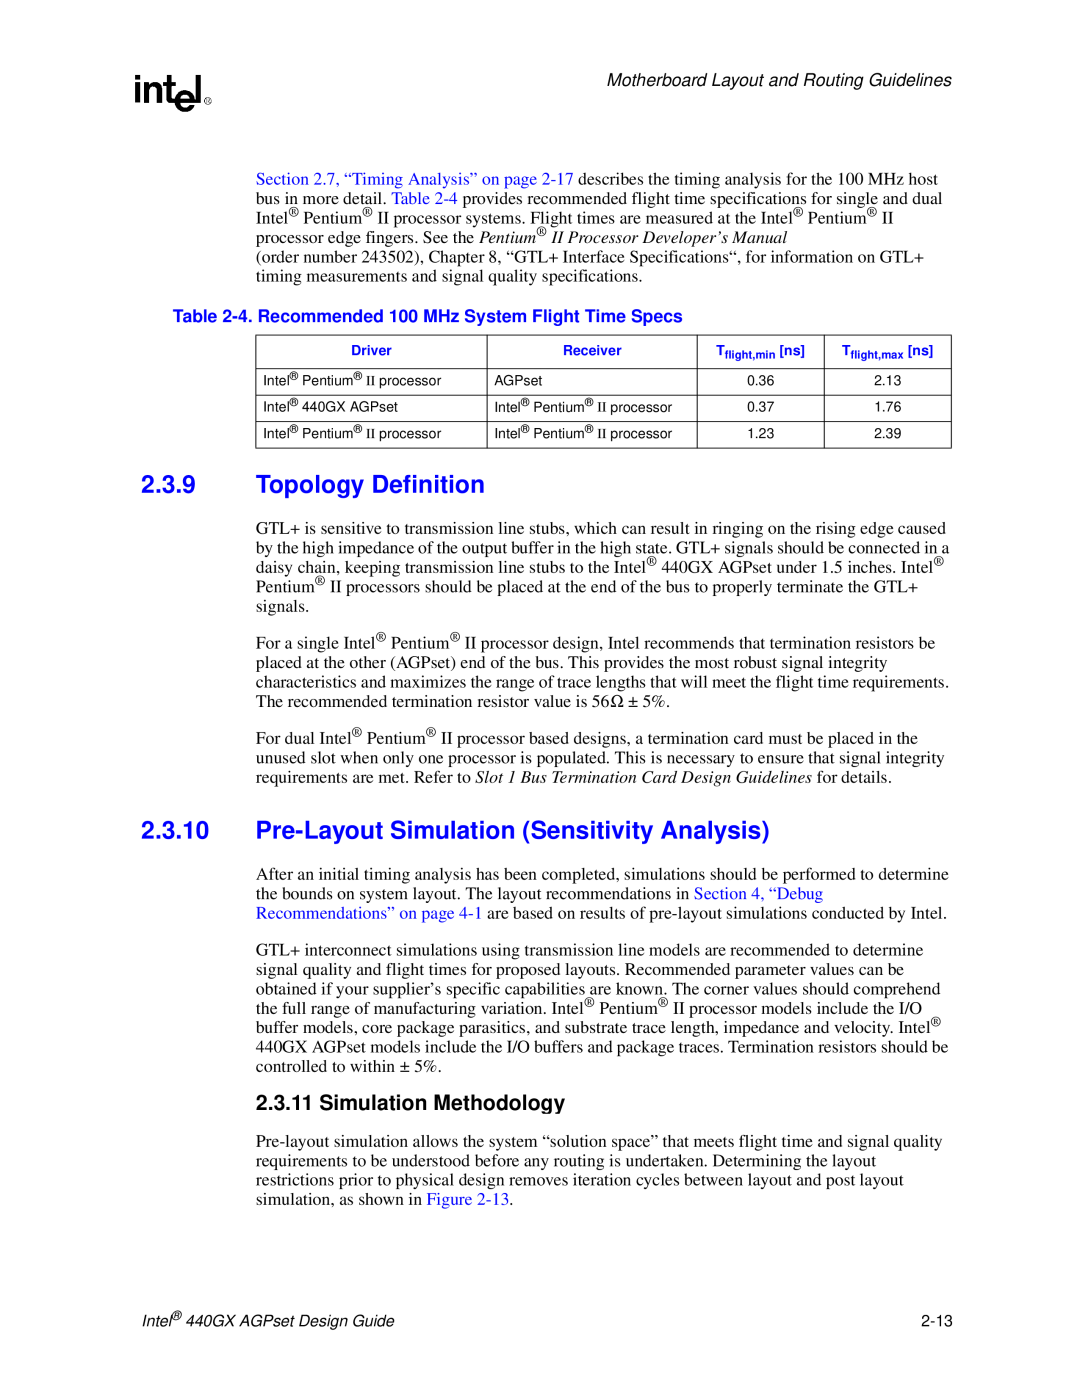 Intel 440GX manual Topology Definition, Pre-Layout Simulation Sensitivity Analysis, Simulation Methodology 